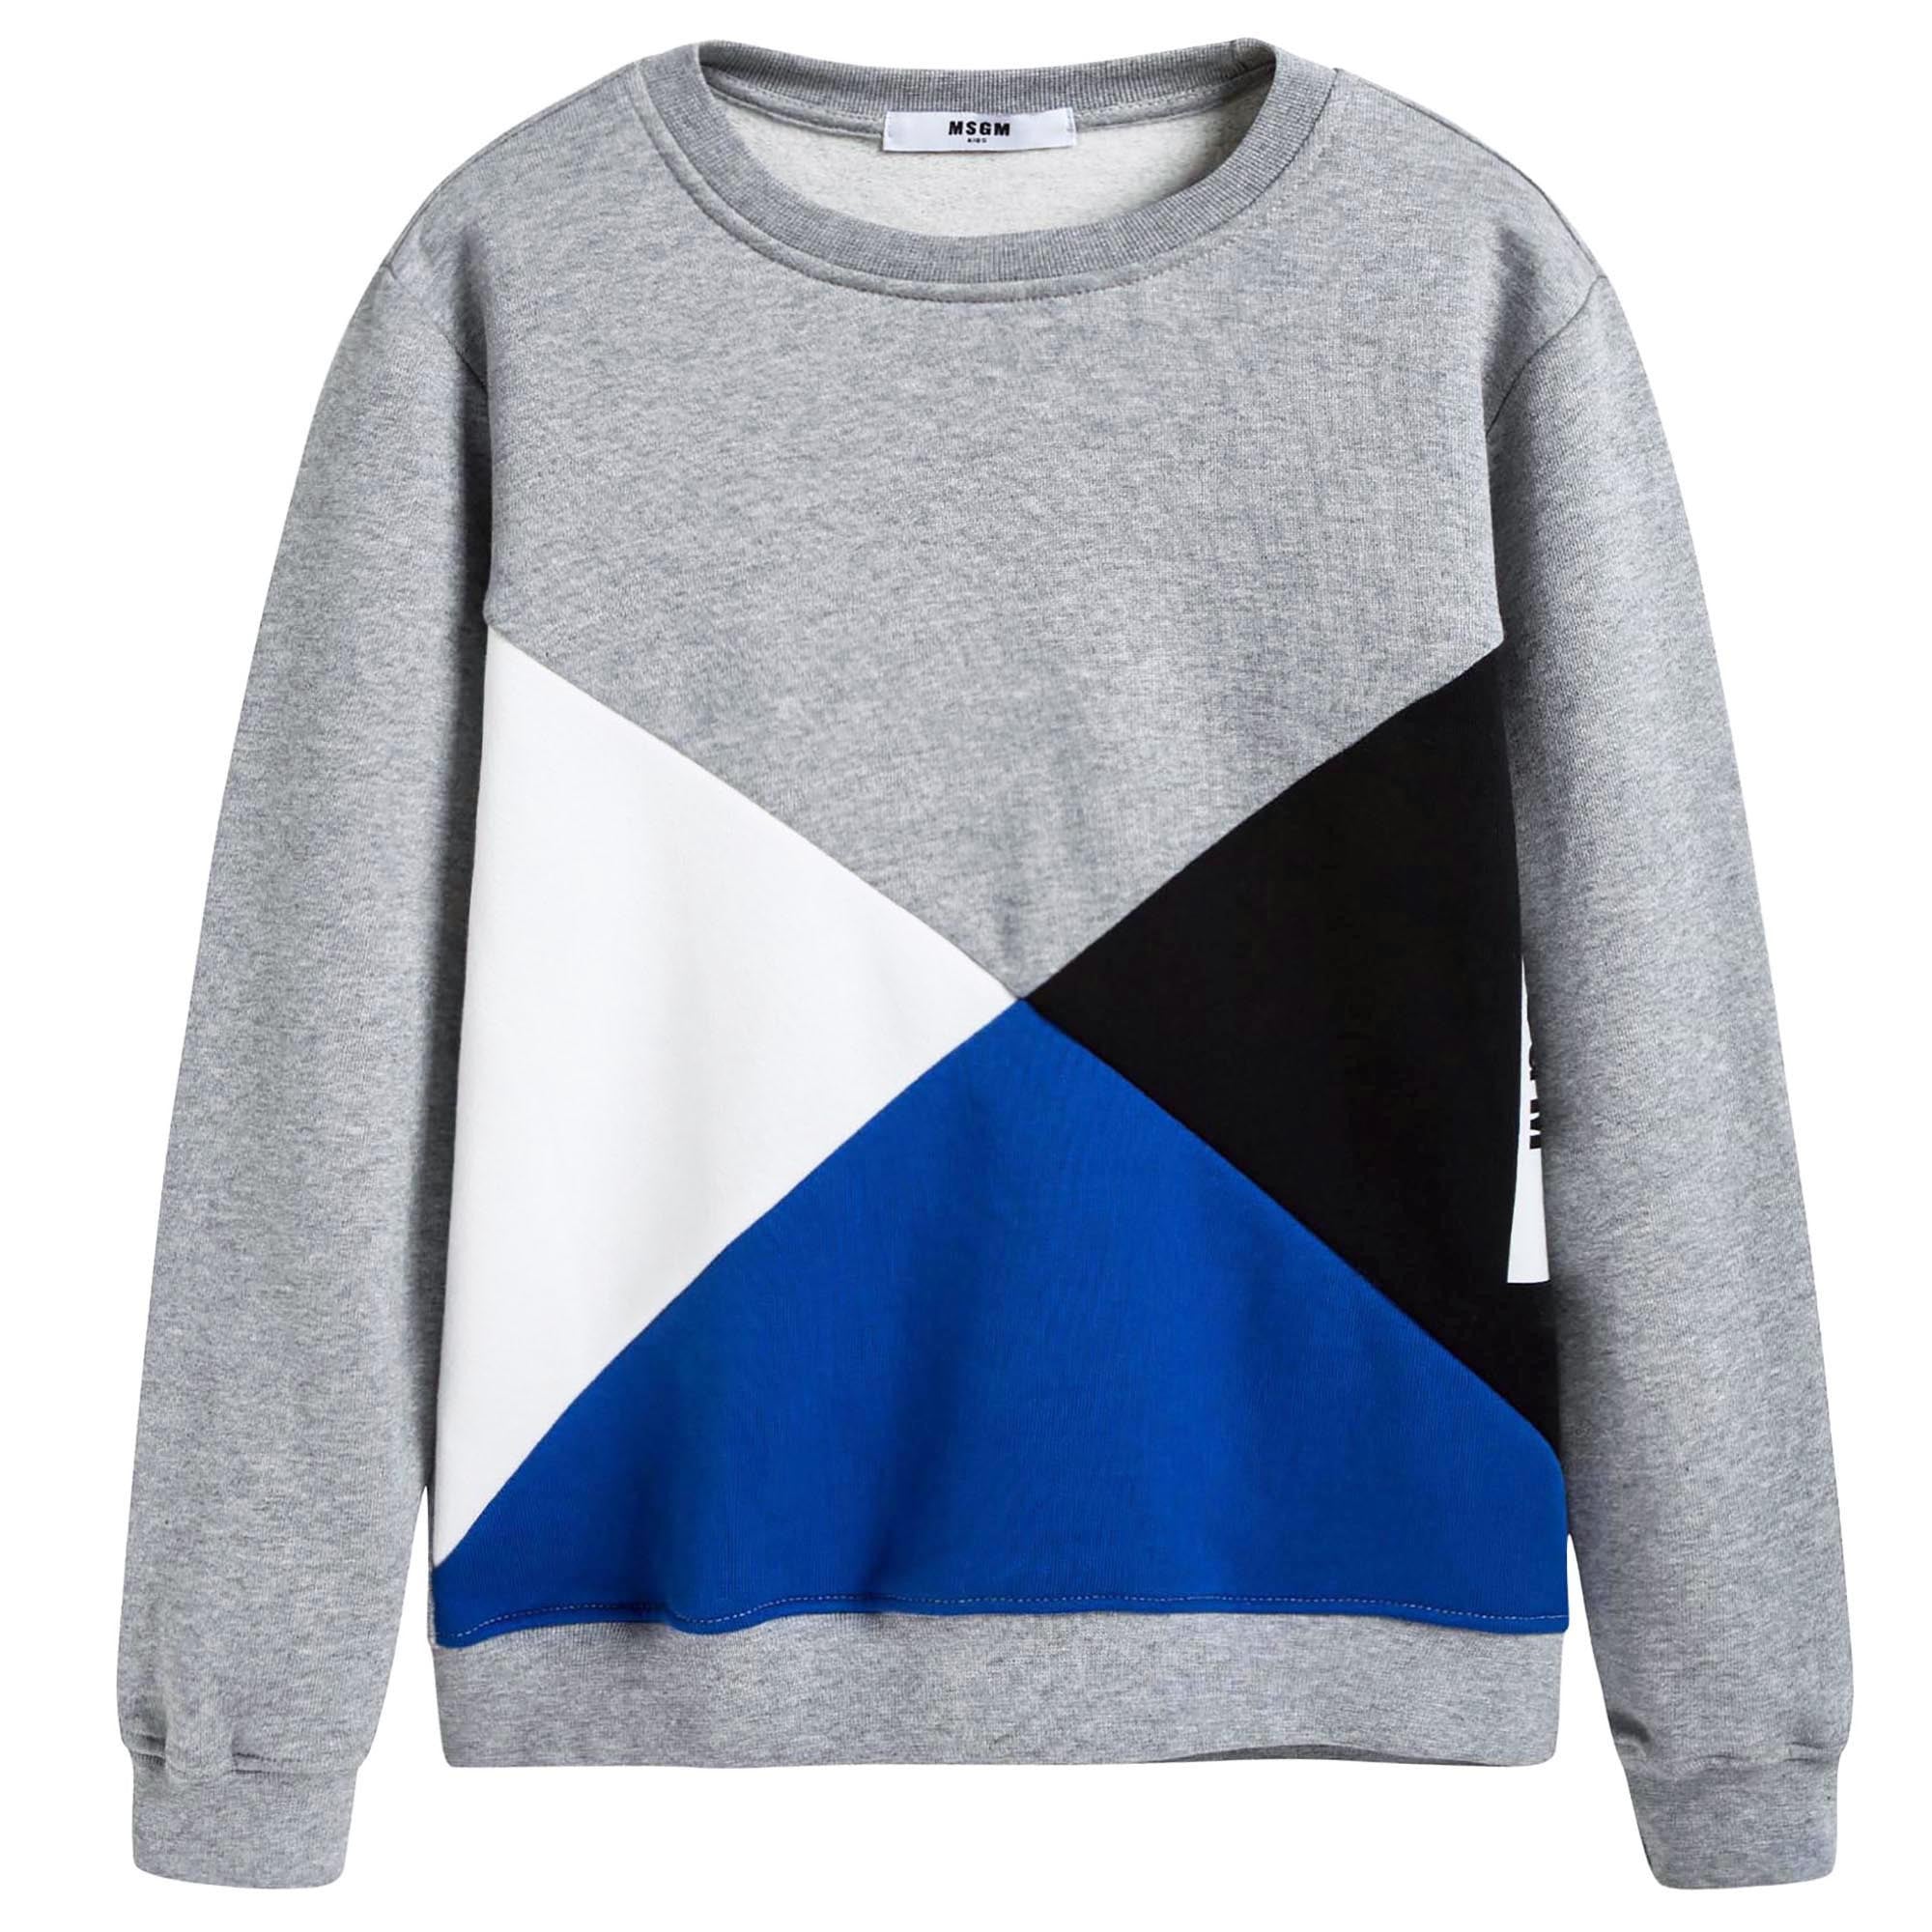 Boys Grey Geometric Sweatshirt